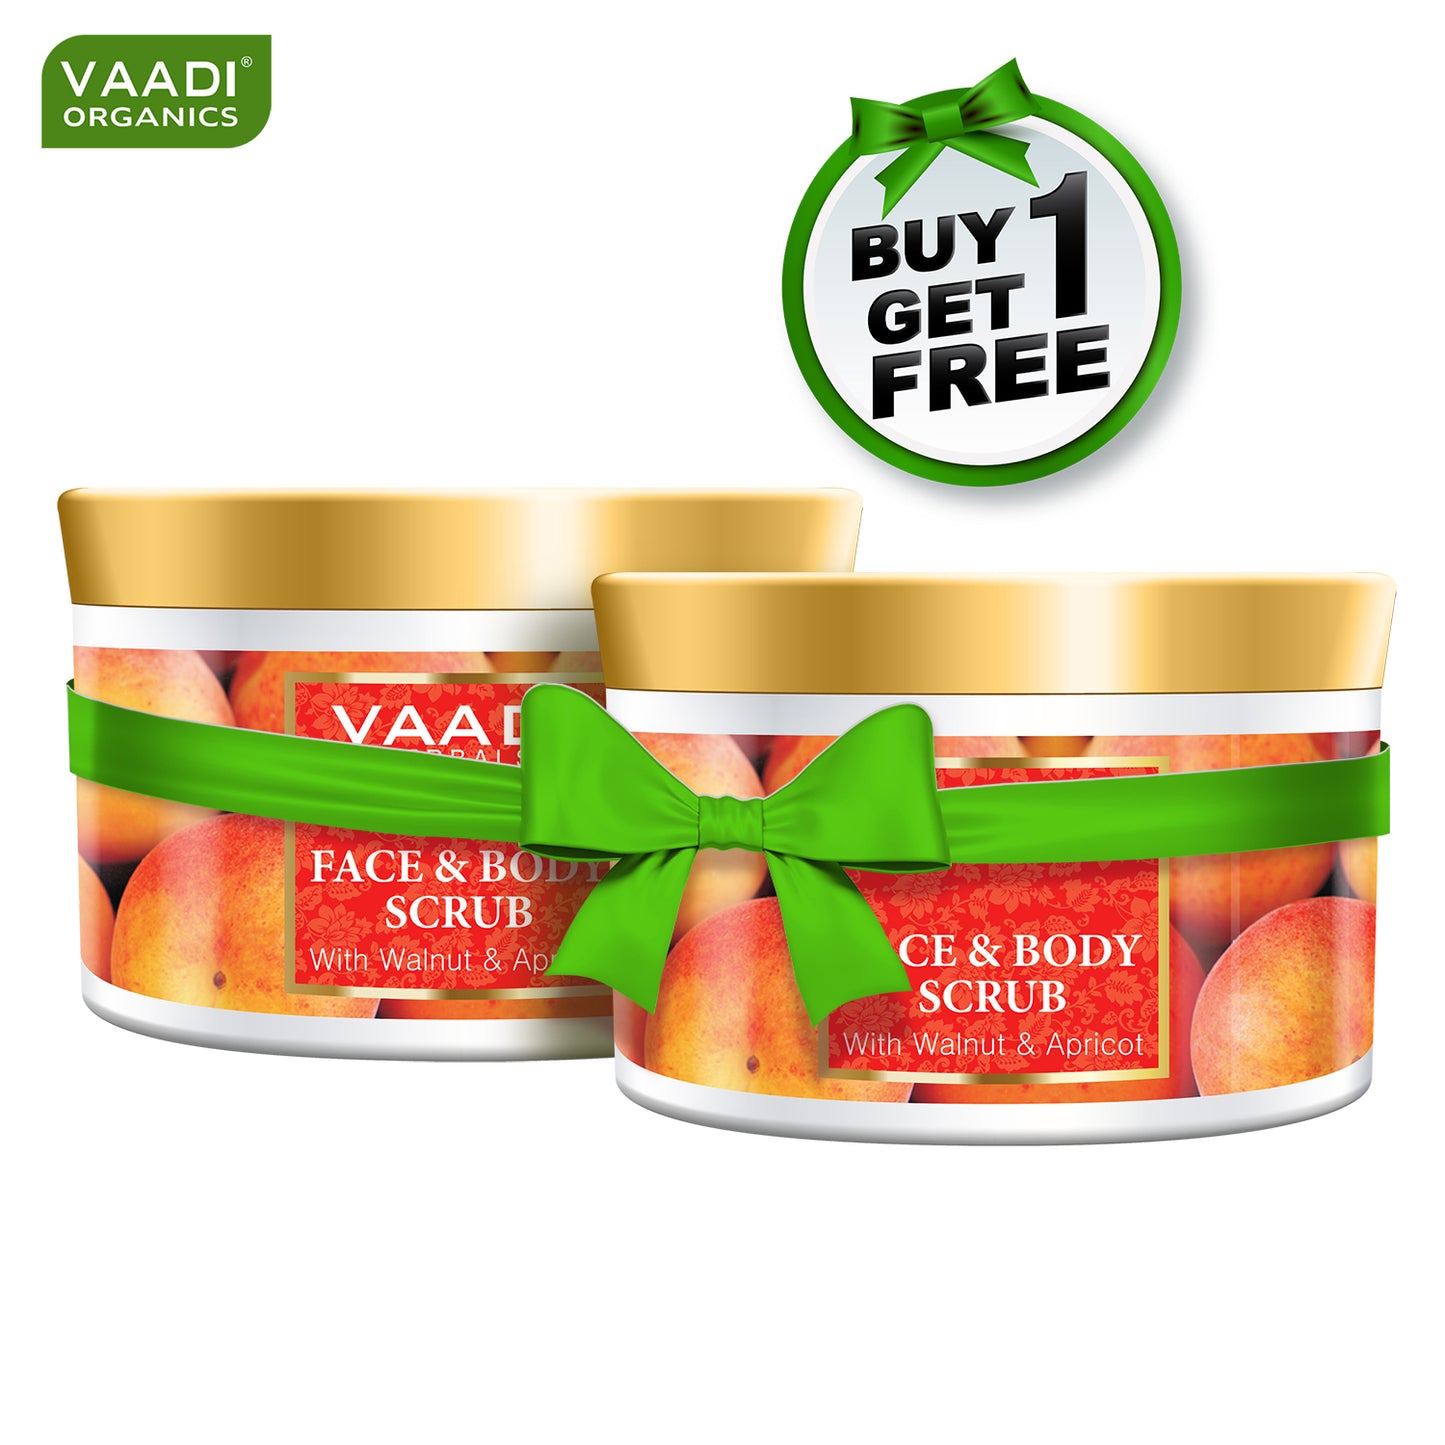 Organic Face & Body Scrub with Walnut & Apricot - Exfoliates & Unclogs Pores - Keeps Skin Youthful ( 500 gms / 17.7 oz) (Buy 1 Get 1 Free)